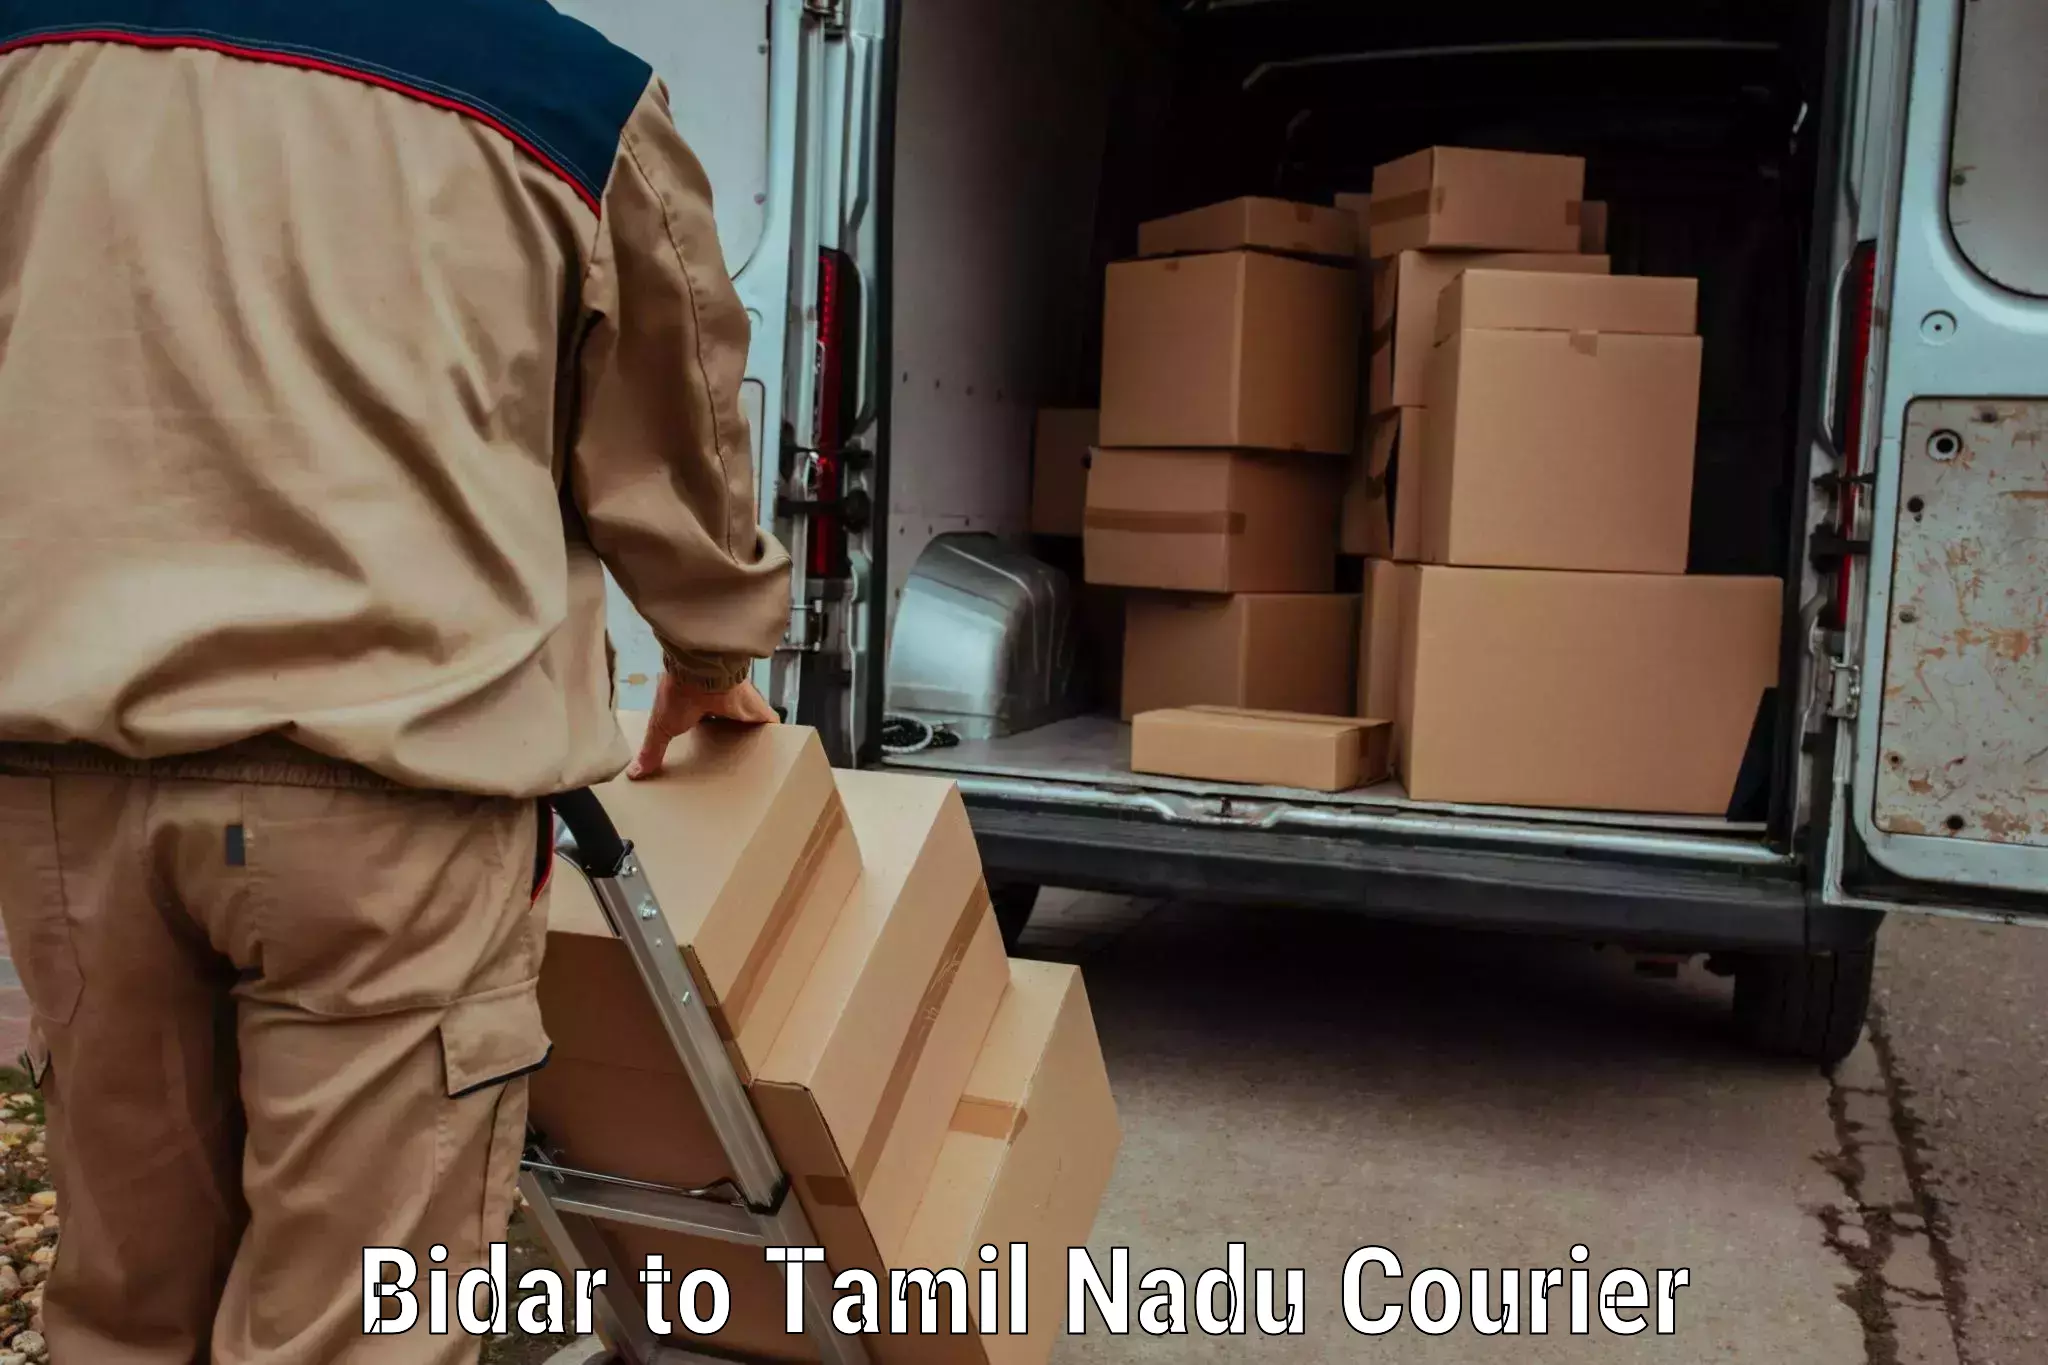 International courier networks Bidar to Melmaruvathur